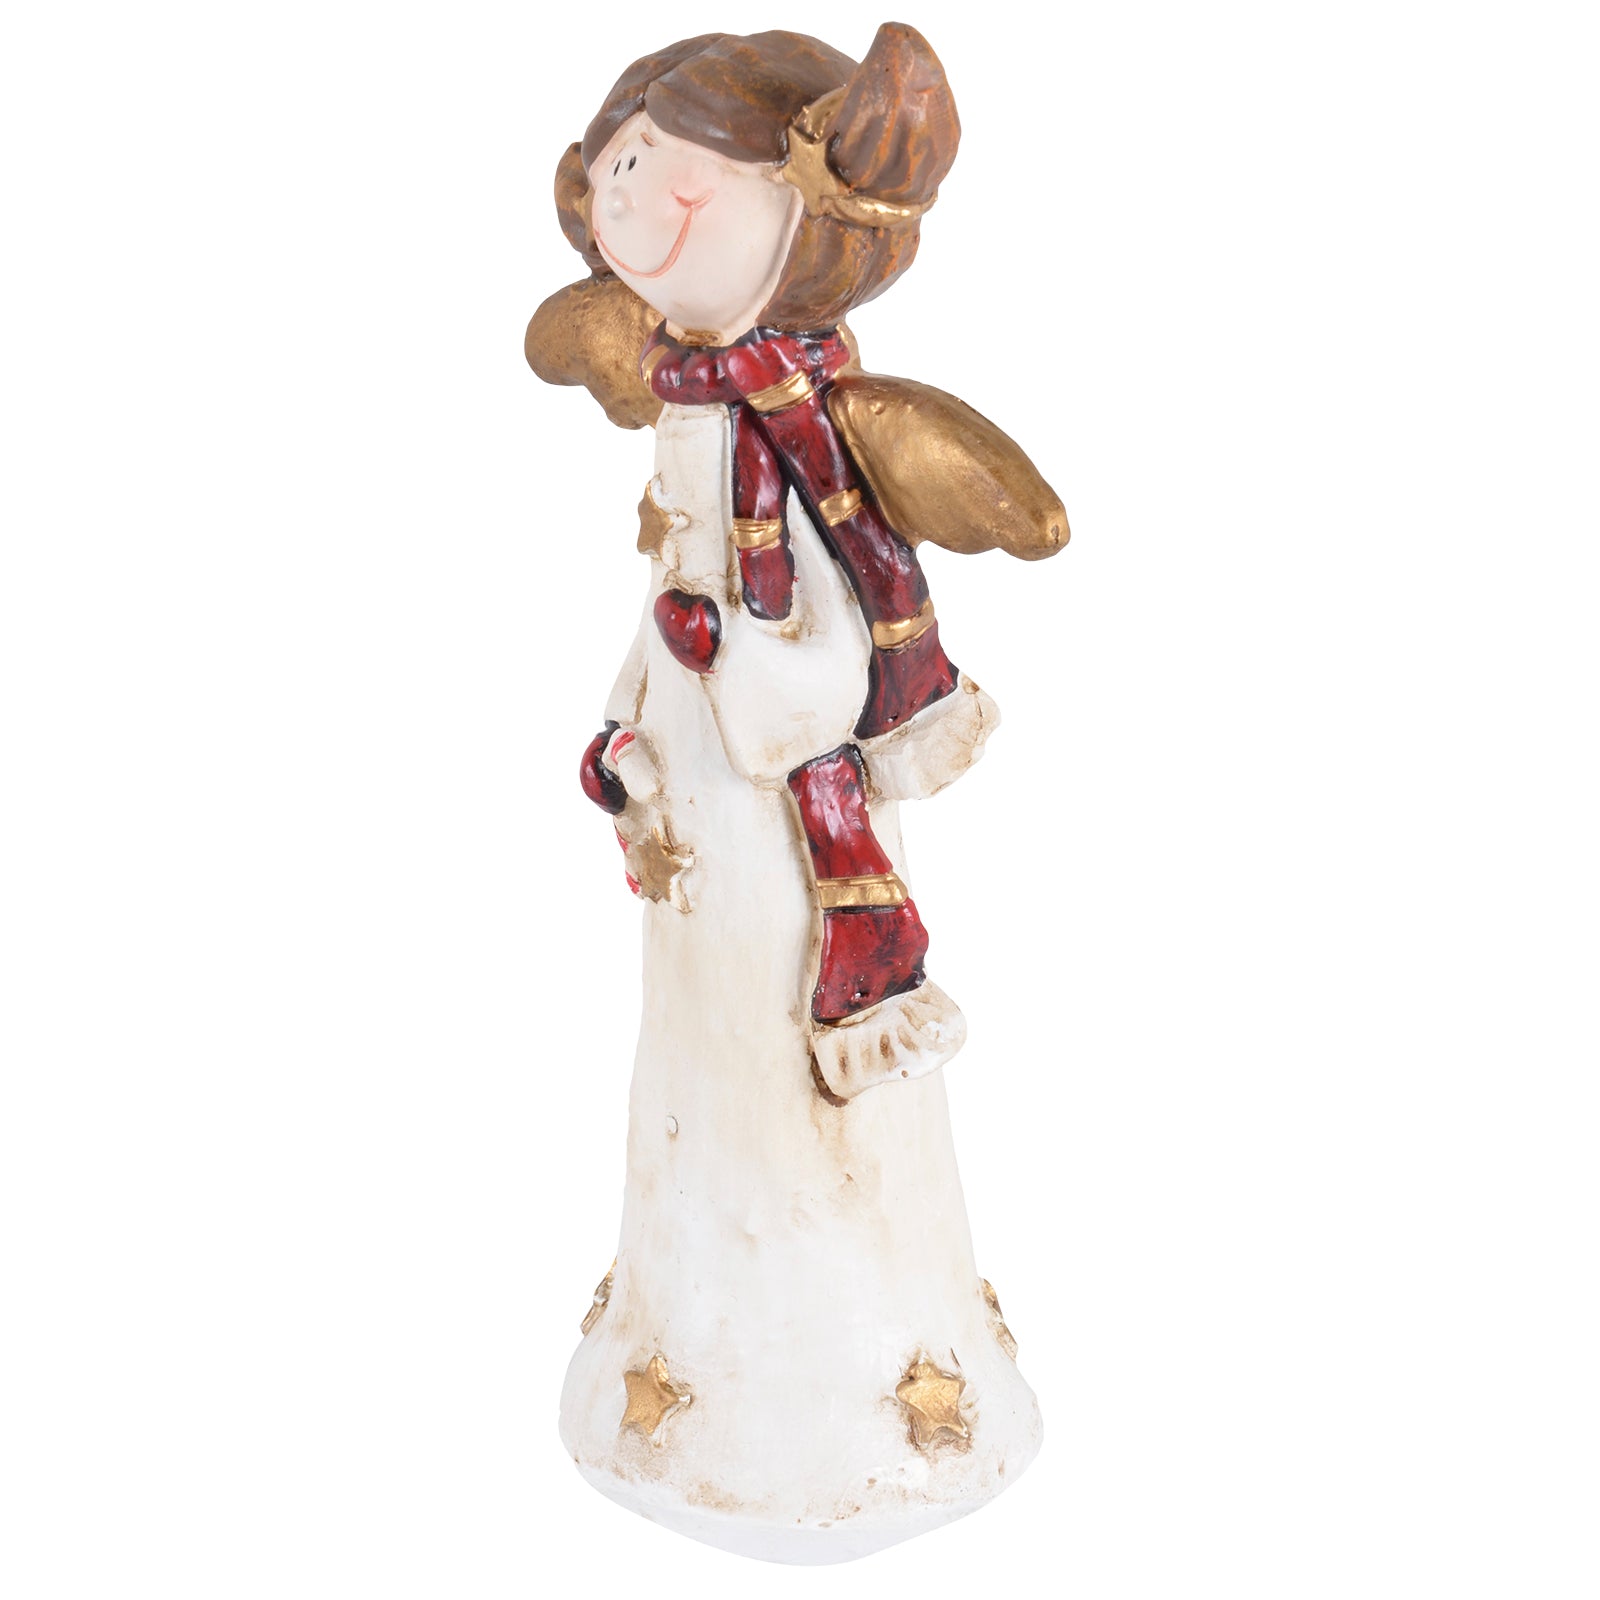 Mr Crimbo Angel Ornament Resin Christmas Decoration - MrCrimbo.co.uk -XS4310 - 16cm -angel figurine